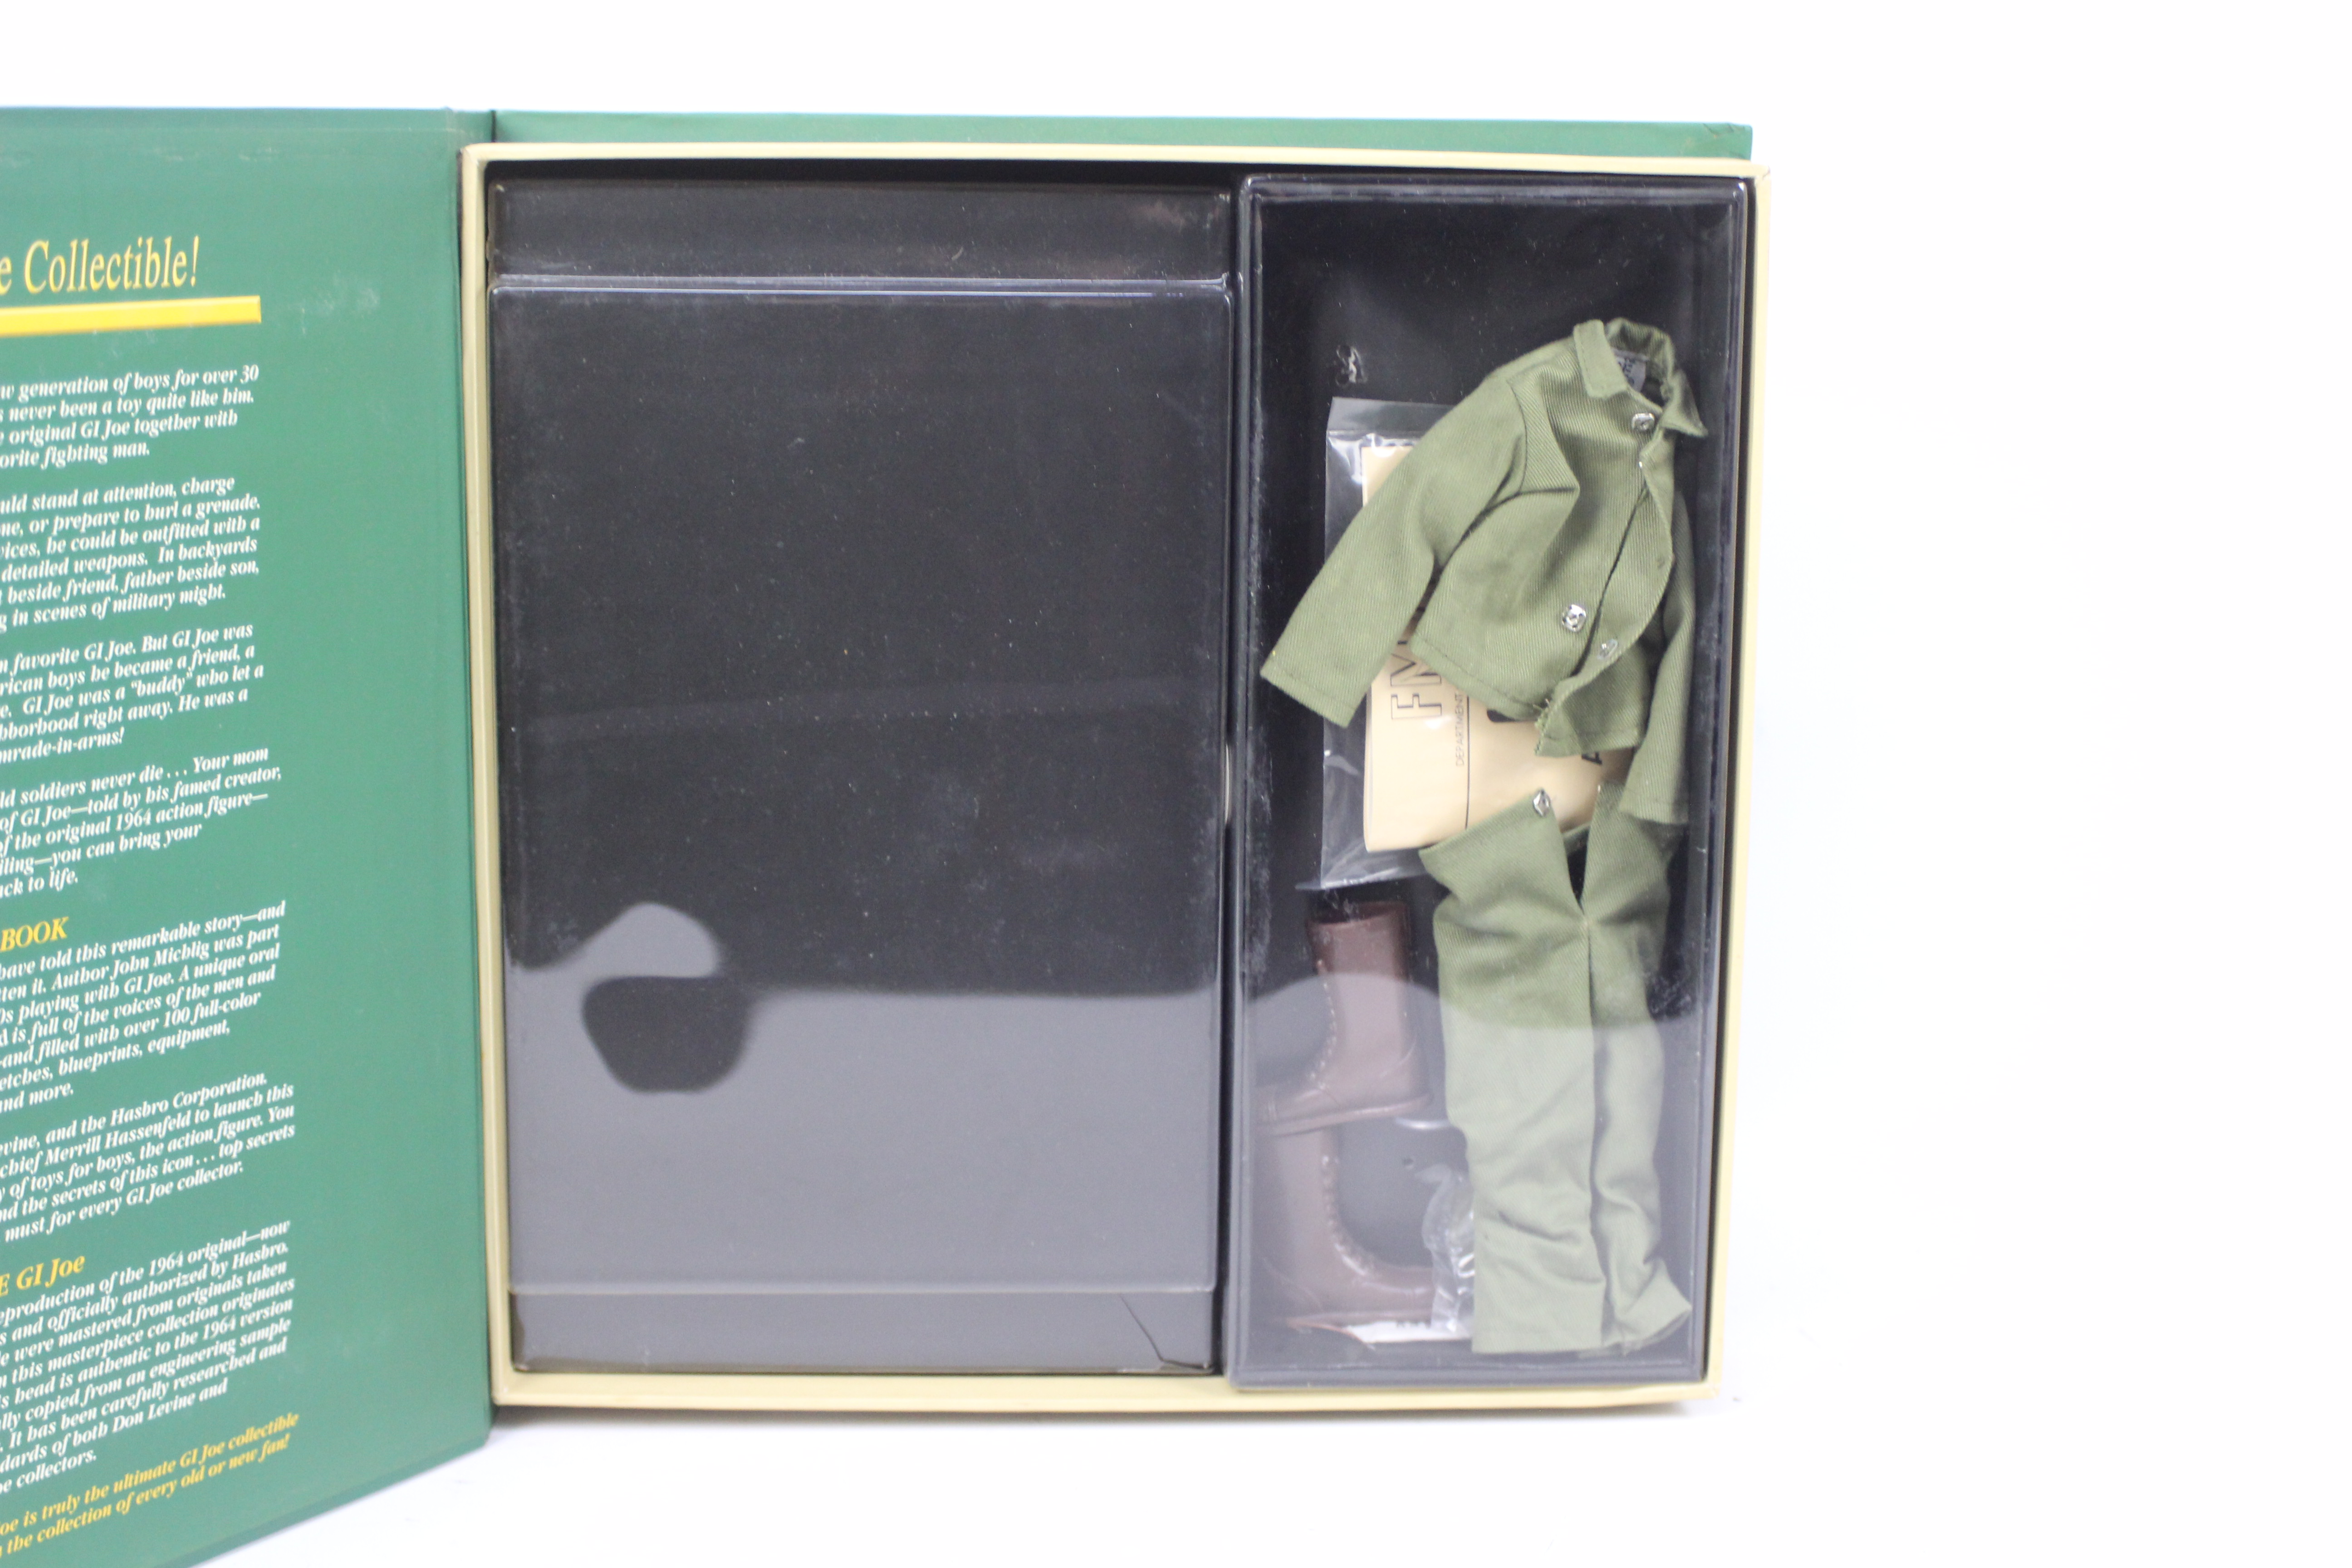 GI Joe, Hasbro - Two boxed incomplete GI Joe Masterpiece Edition boxed sets. - Image 4 of 6